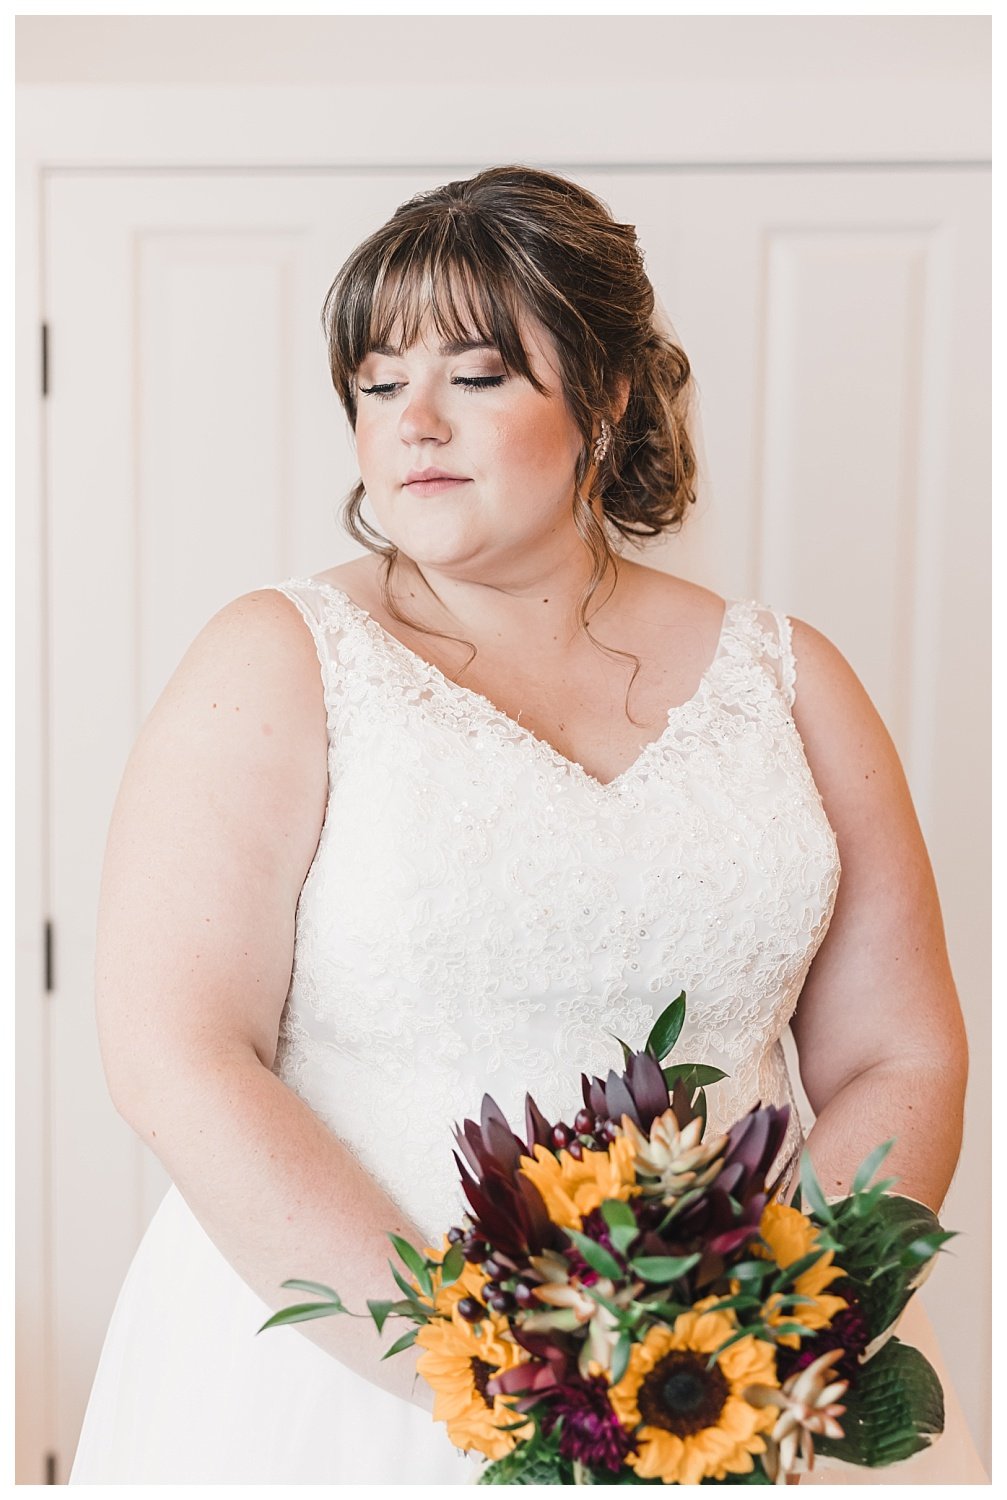 Osbornia Farm wedding, quarryville pa, bride getting ready, bridal portraits, sunflowers, bouquet